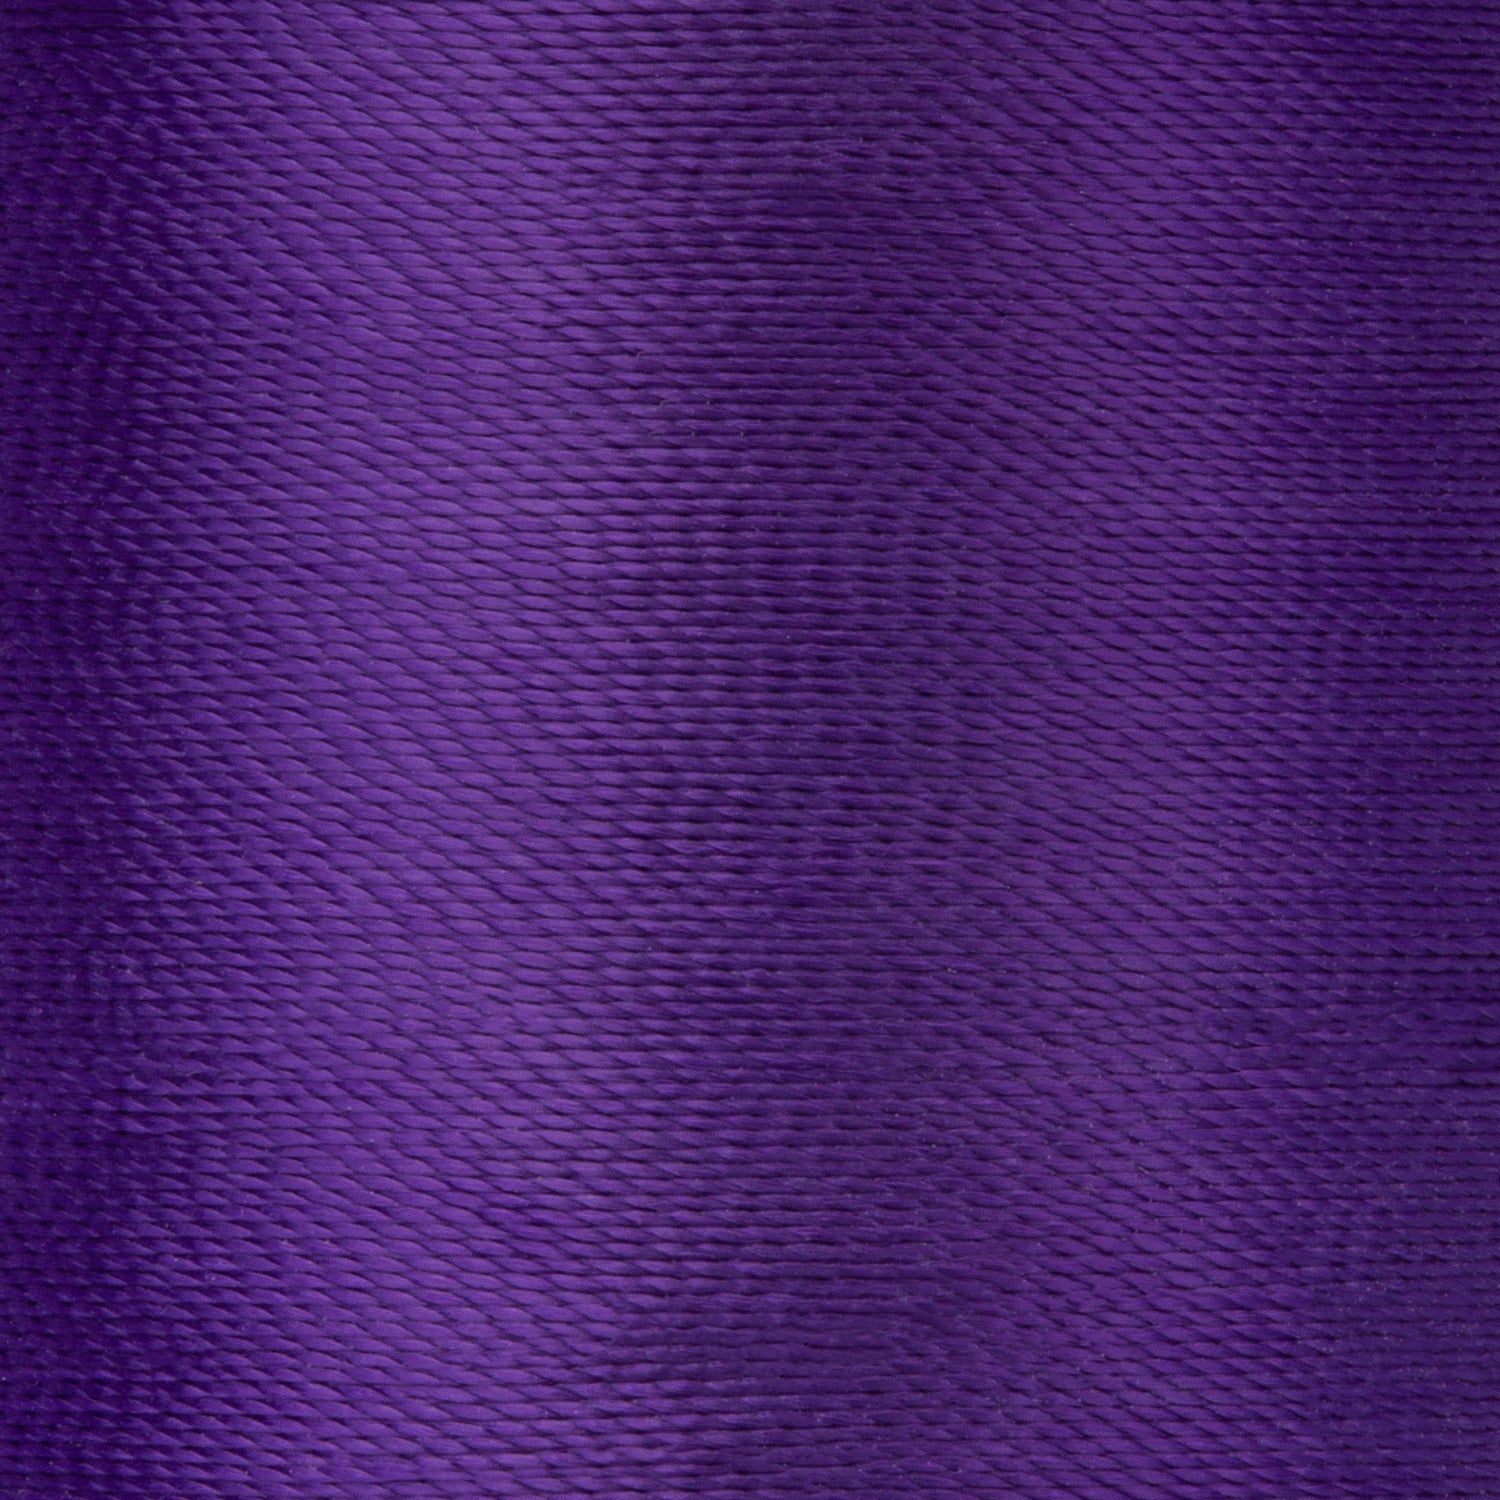 Coats & Clark Eloflex Stretchable Thread Purple